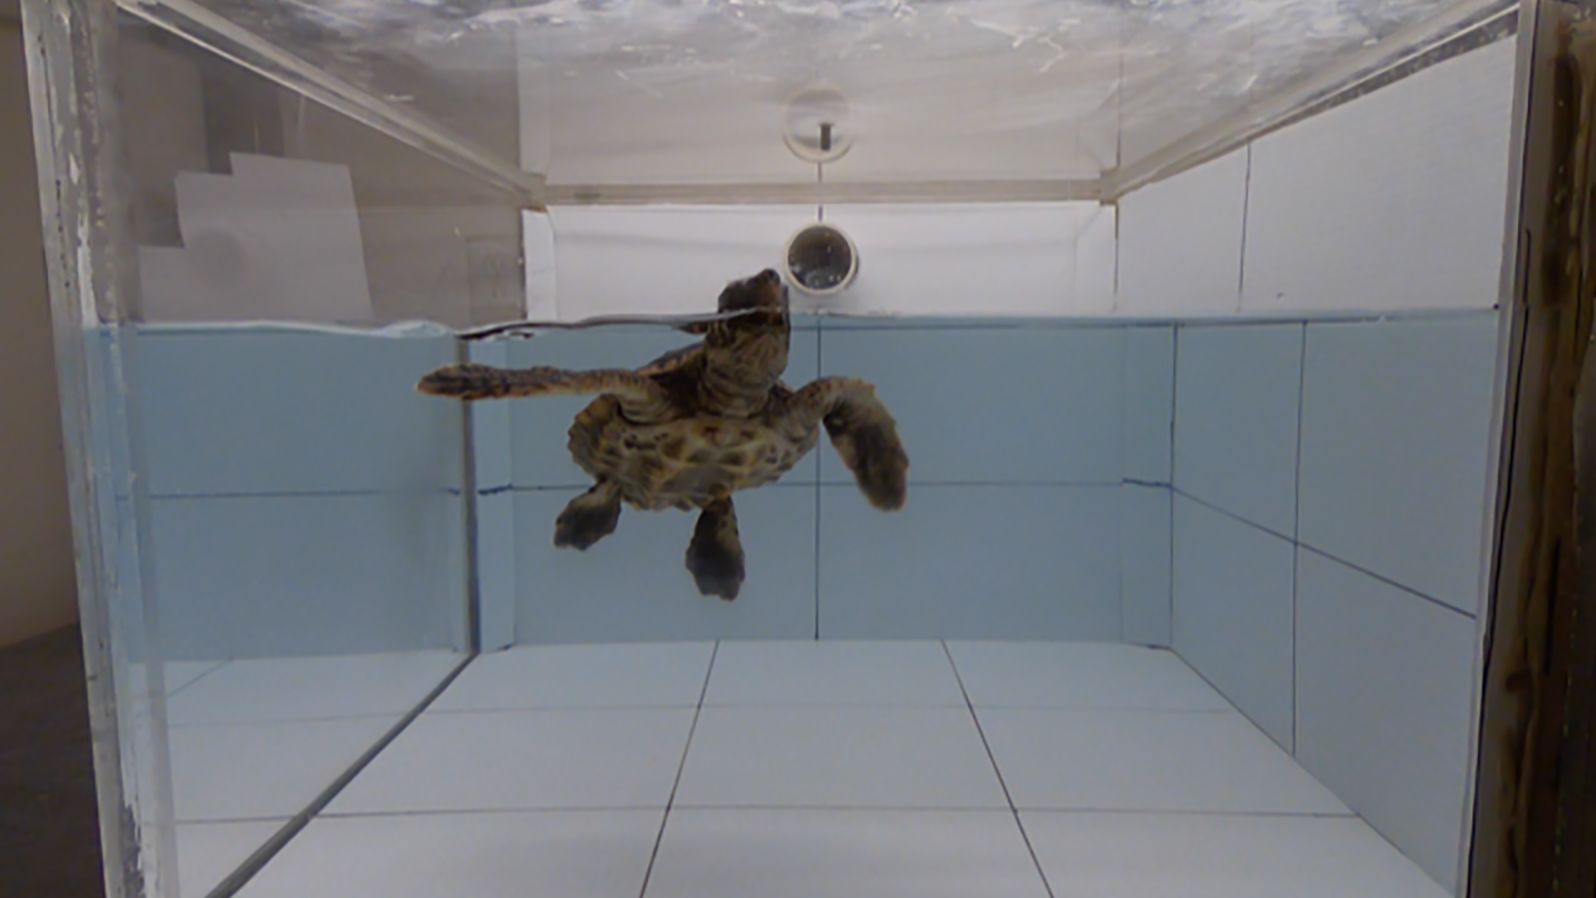 A loggerhead turtle swims in an experimental arena. 